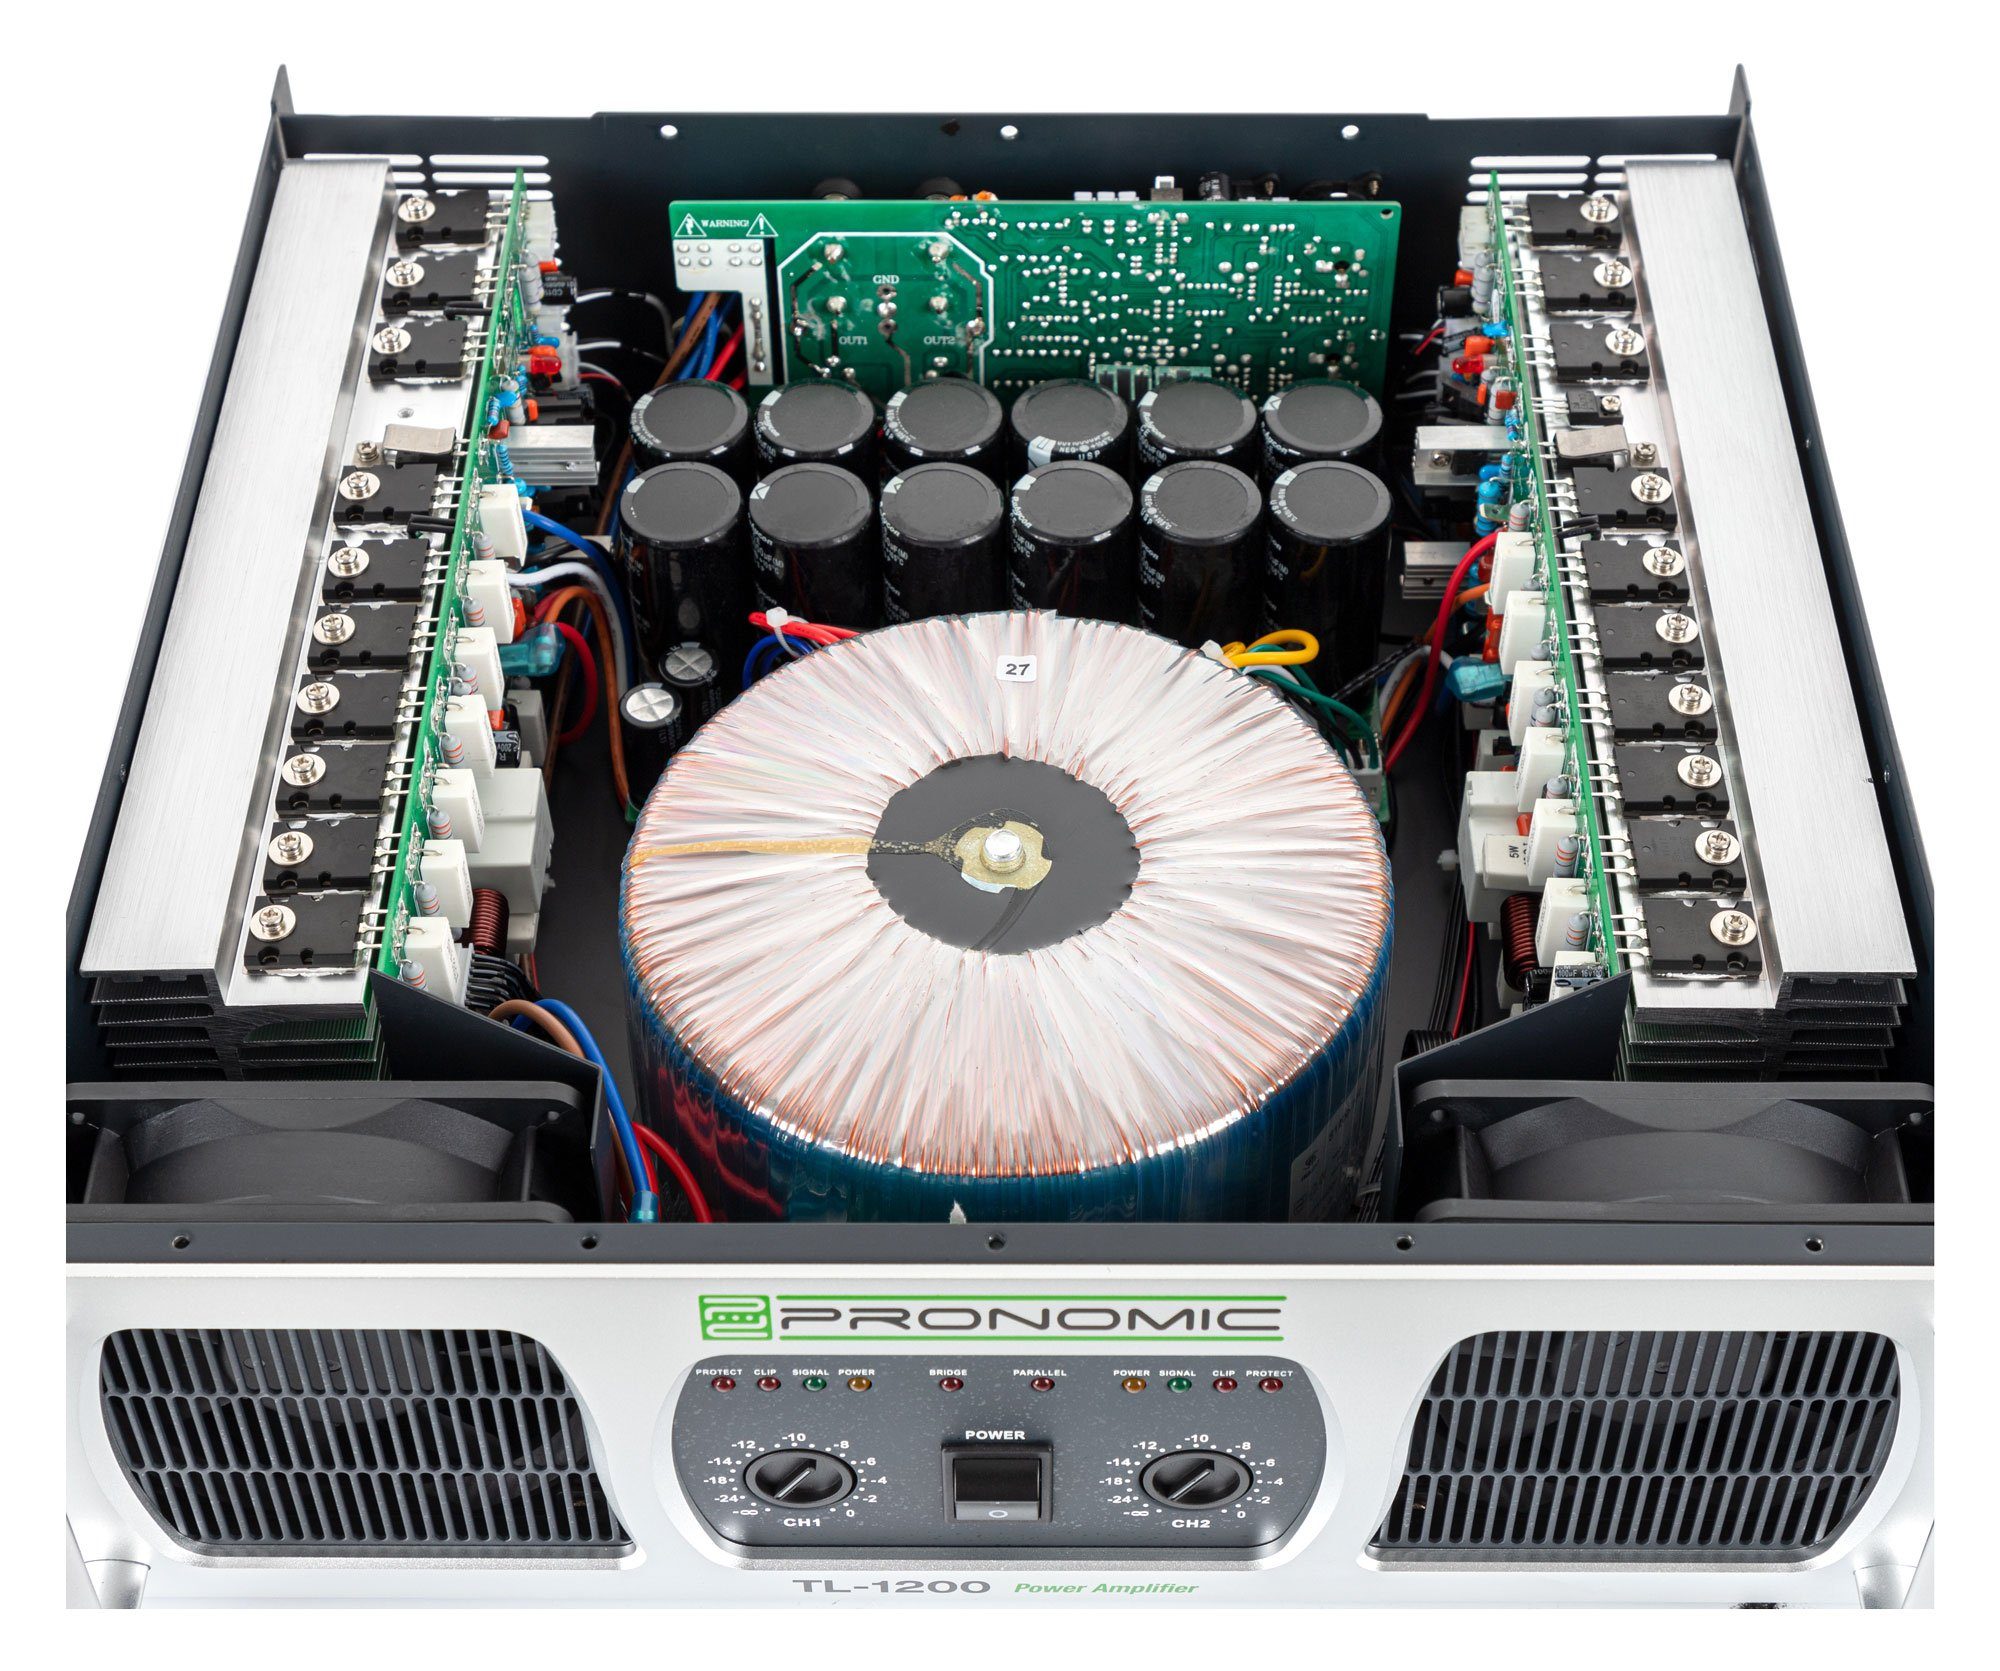 Pronomic TL-1200 Endstufe Verstärker (Anzahl 4800 Ohm) an Stereo-Leistungsverstärker Watt Kanäle: 2 W, 2x 2400 mit 2